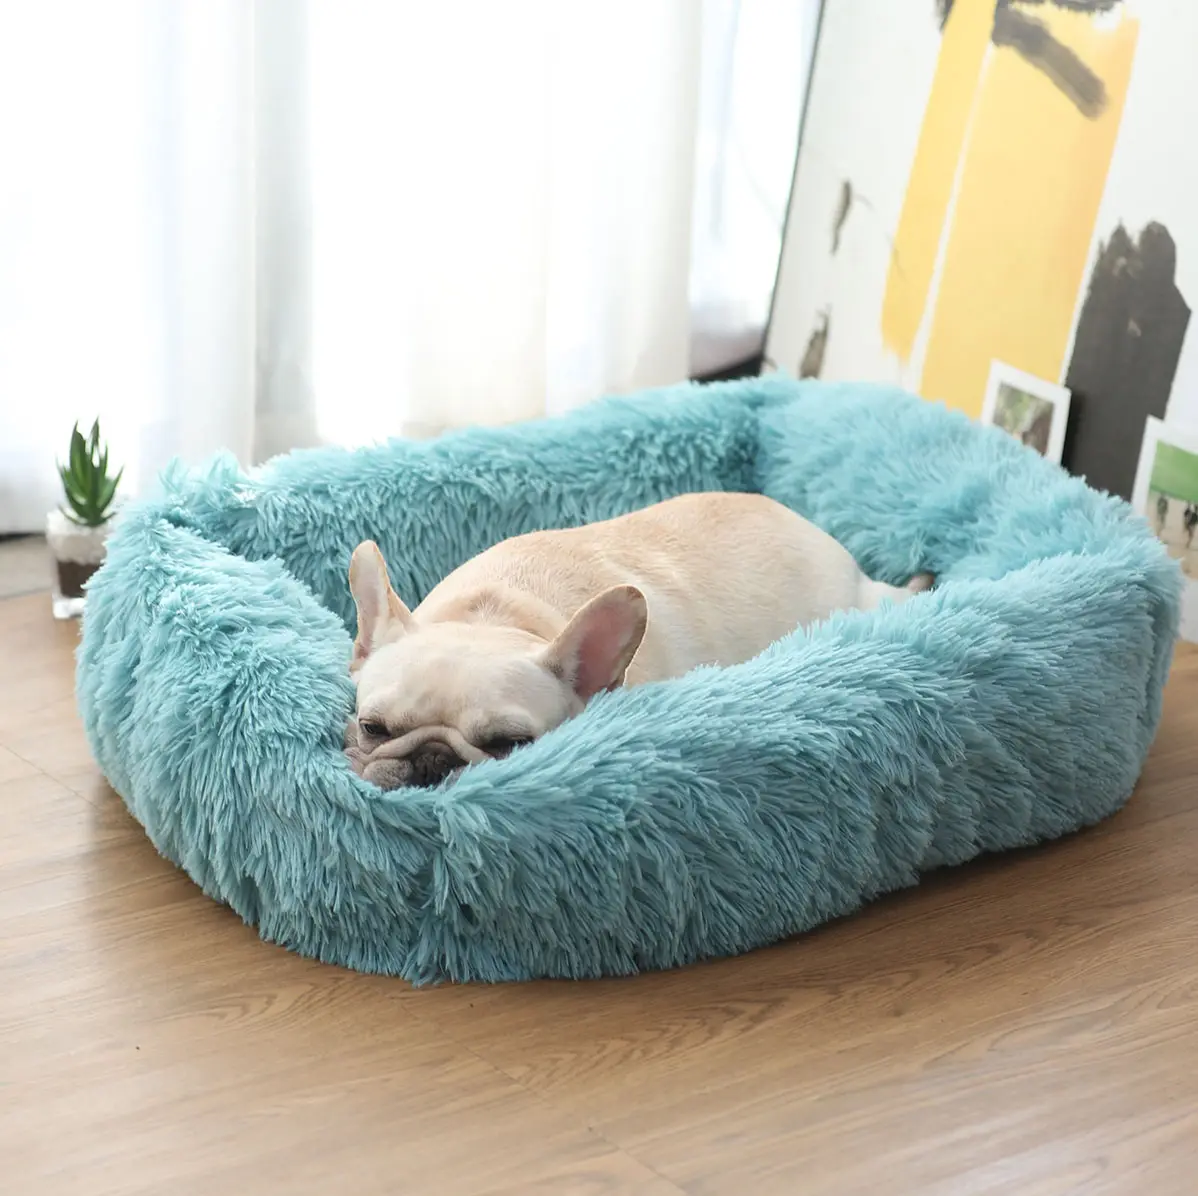 Tempat tidur anjing peliharaan semua musim bentuk kaki panjang mewah hangat tempat tidur kucing nyaman dan nyaman bantal hewan peliharaan untuk anak anjing besar produk desain tempat tidur anjing